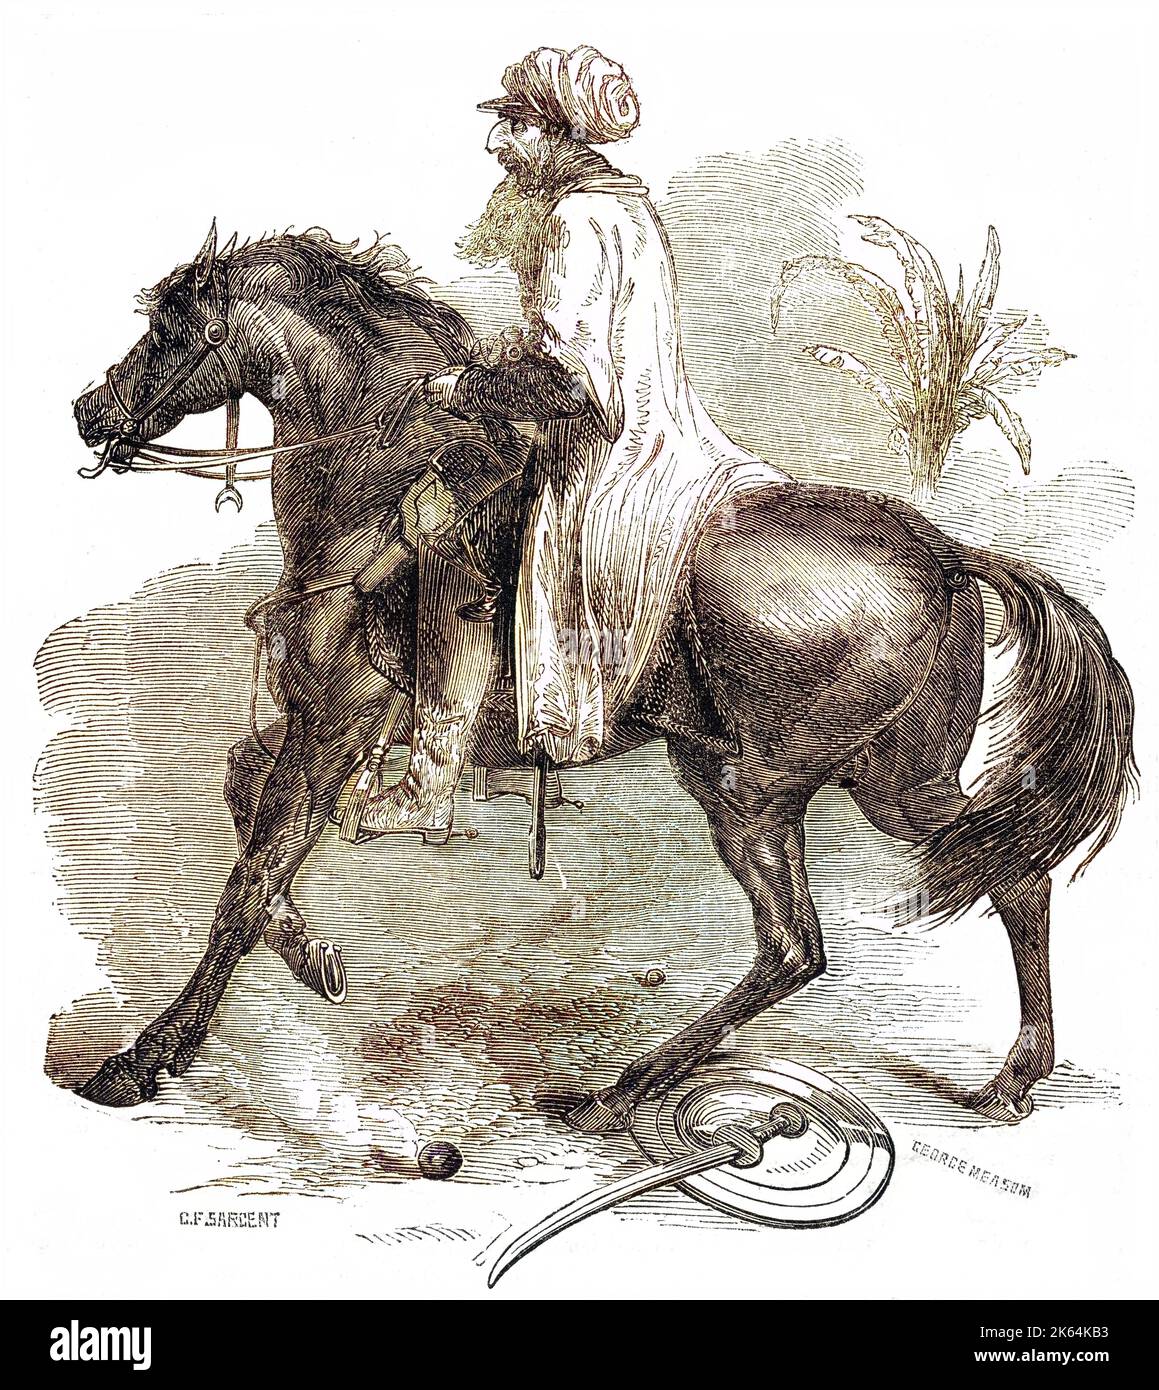 SIR CHARLES JAMES NAPIER (1782 - 1853), British military commander, on horseback in India. Stock Photo